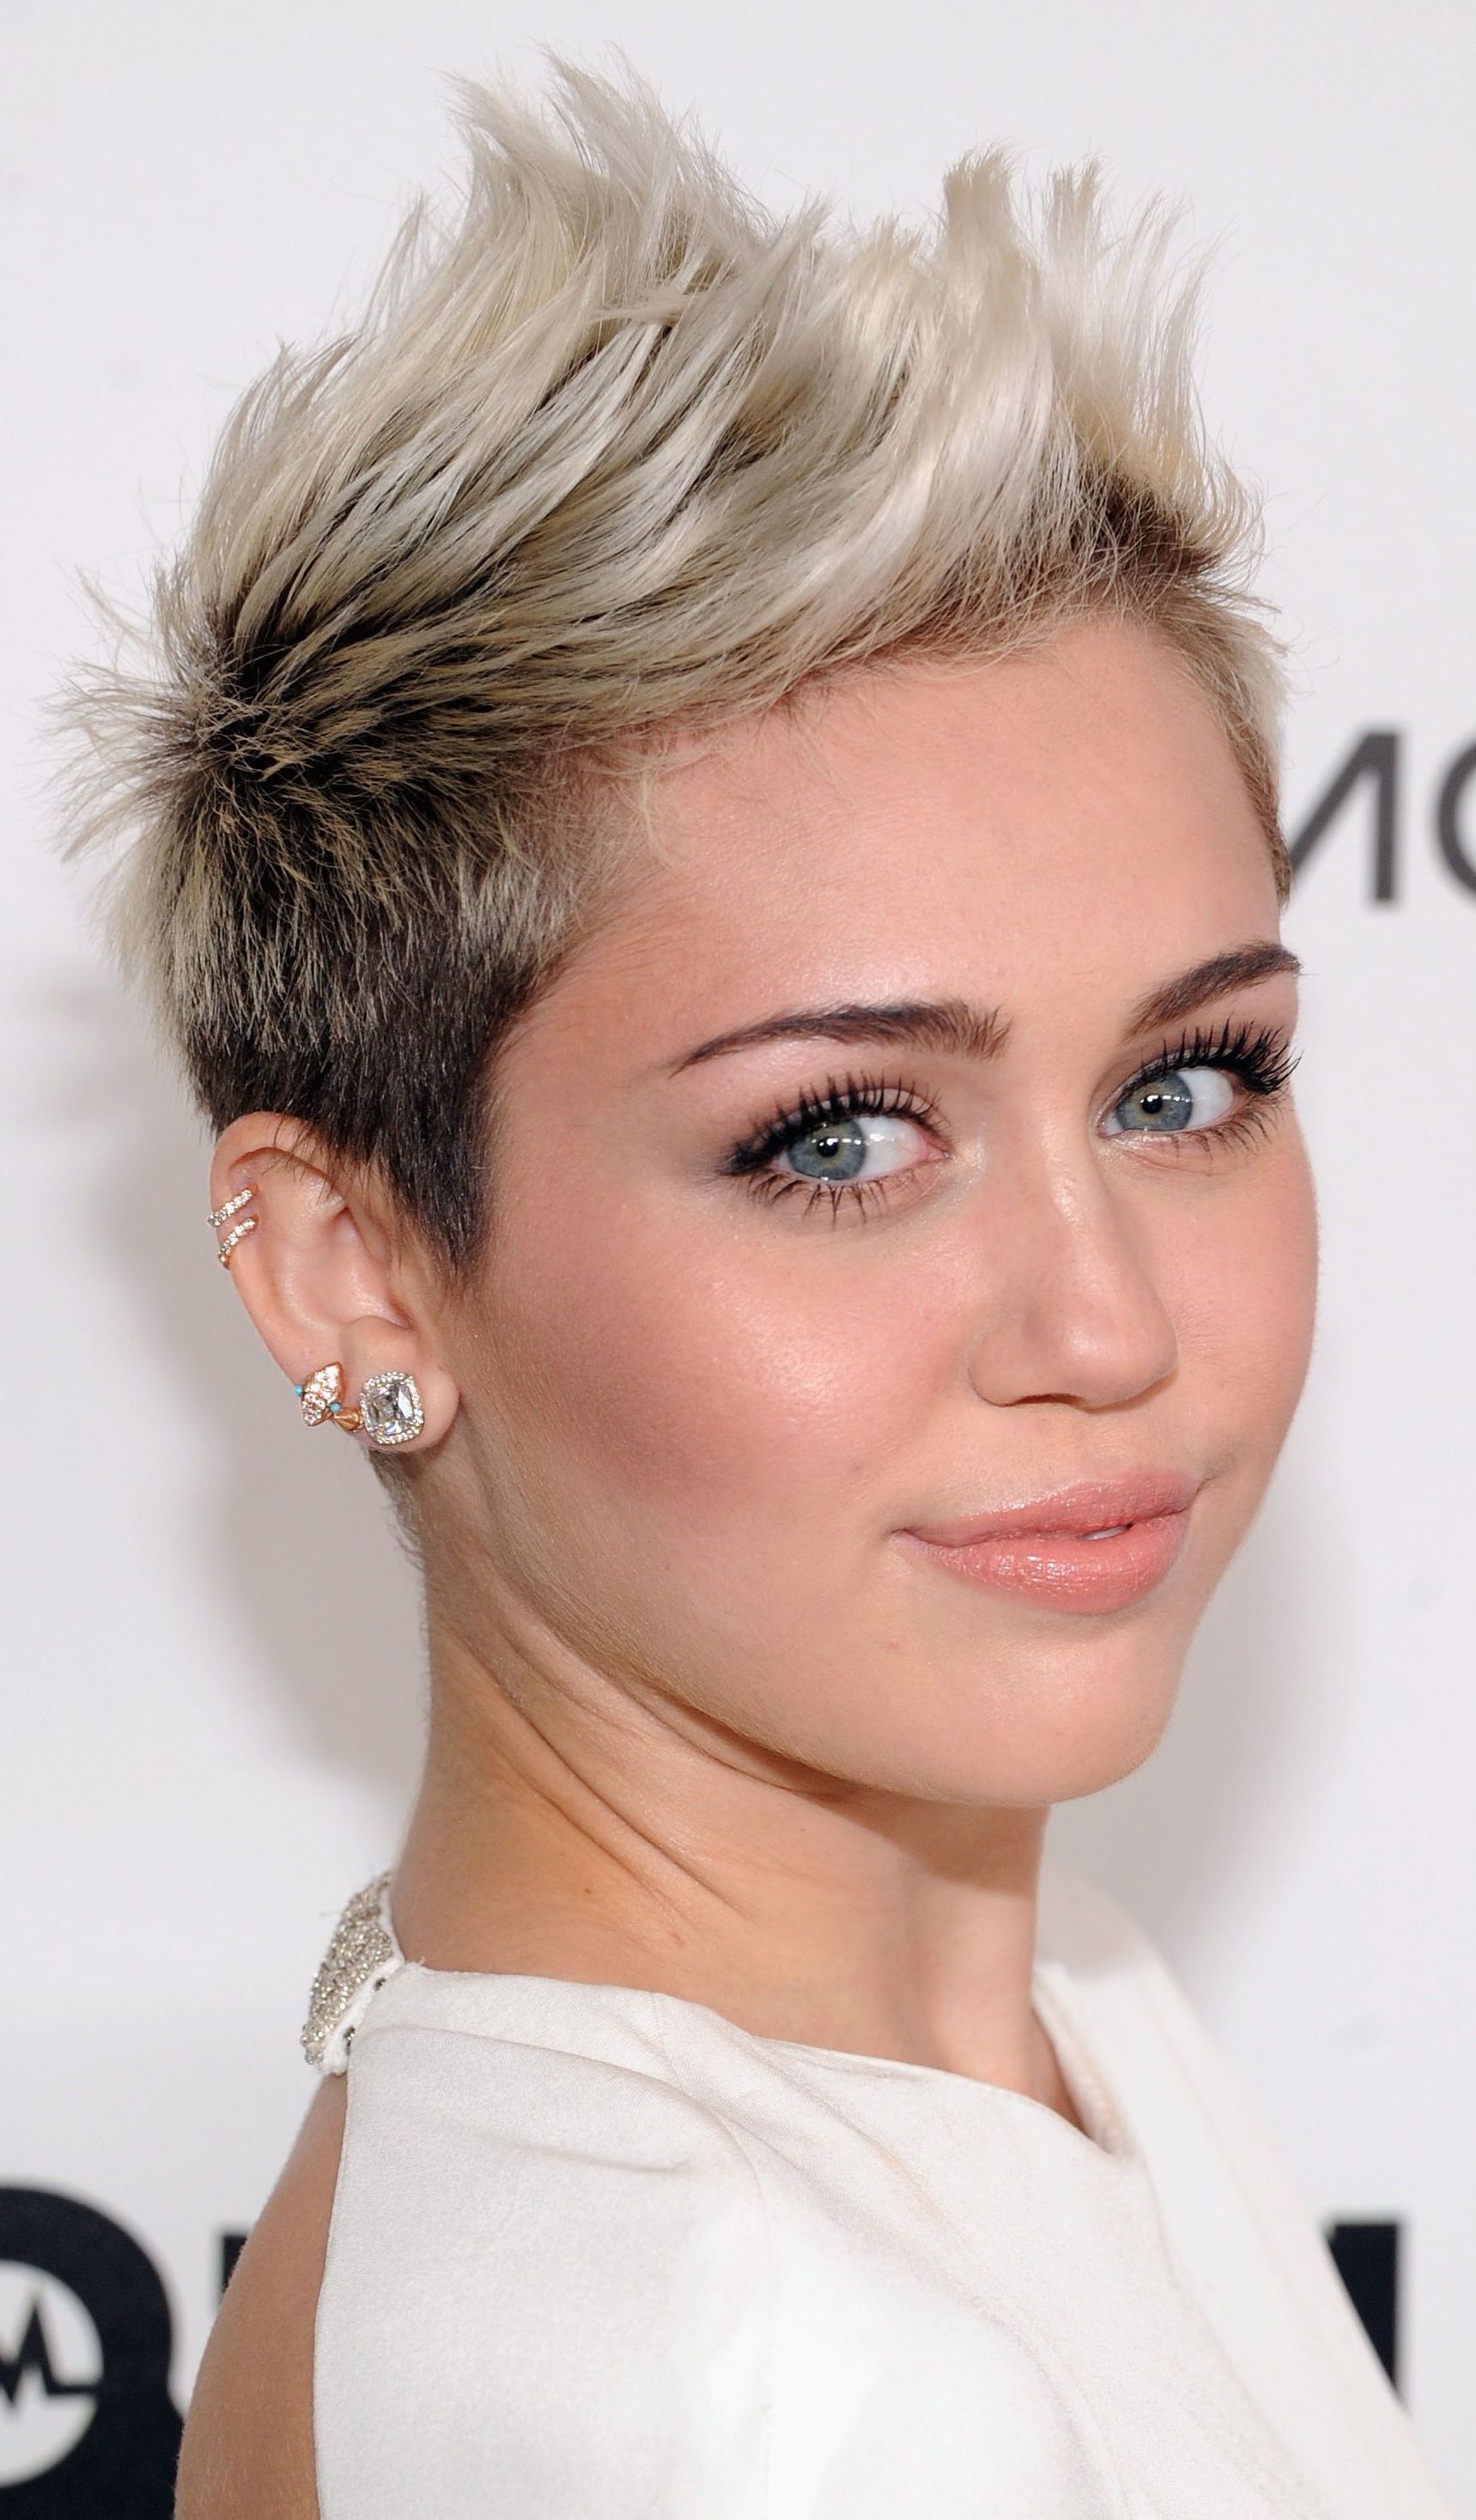 Miley Cyrus: Platinum Blonde Ombre Short Hairstyle In 2018 | Hair For Platinum Blonde Short Hairstyles (View 11 of 25)